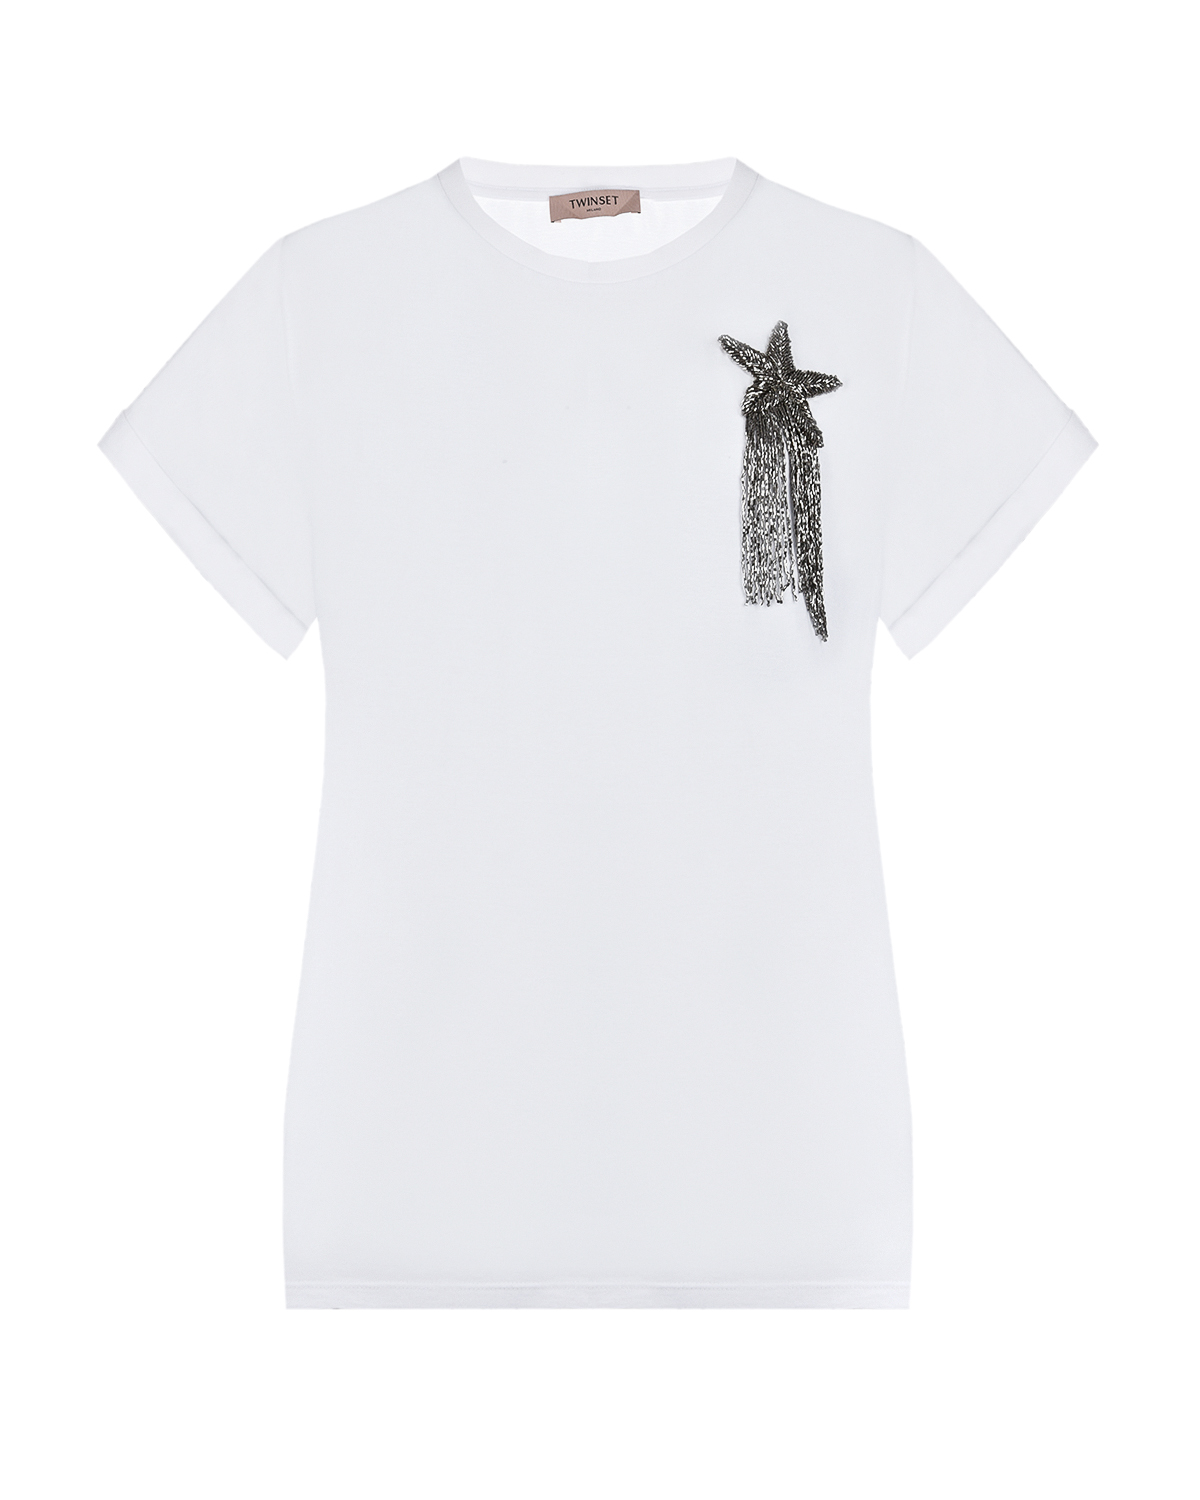 Белая футболка с вышивкой "Звезда" TWINSET, размер 38, цвет белый - фото 1